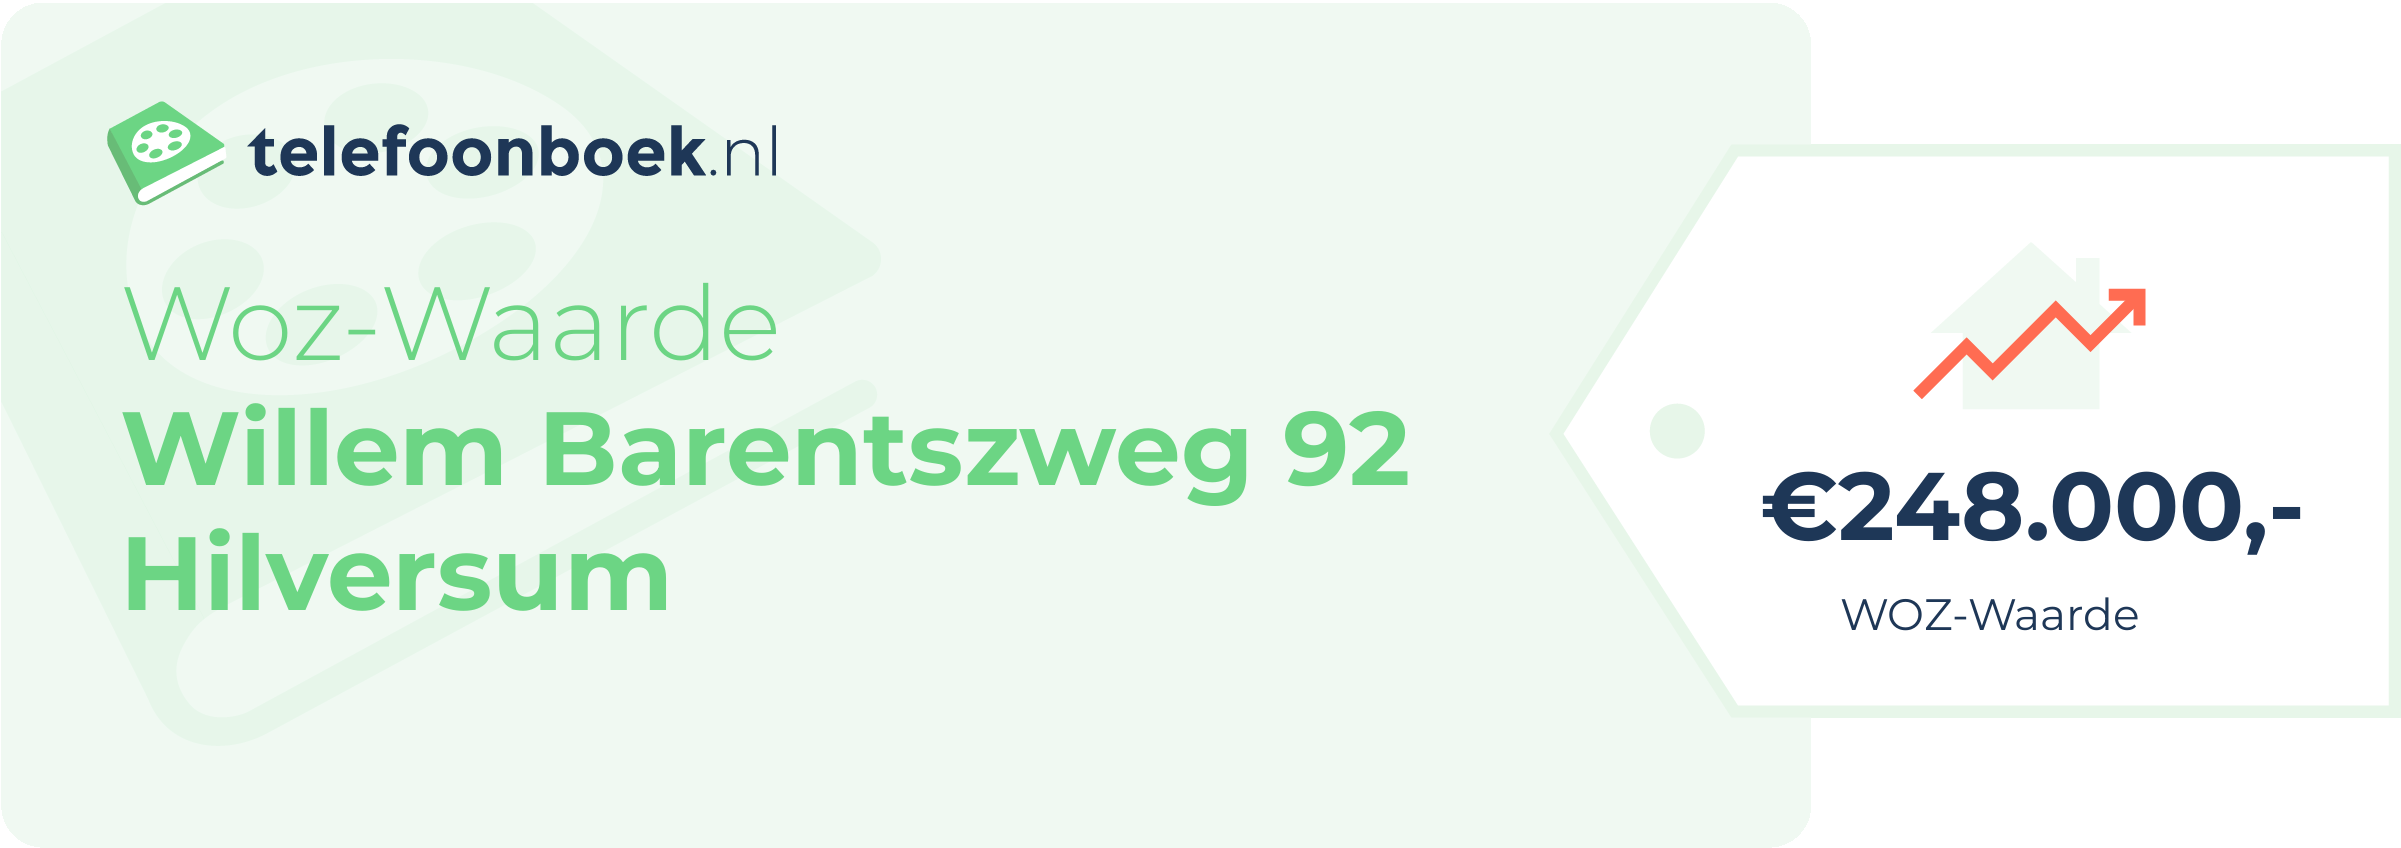 WOZ-waarde Willem Barentszweg 92 Hilversum